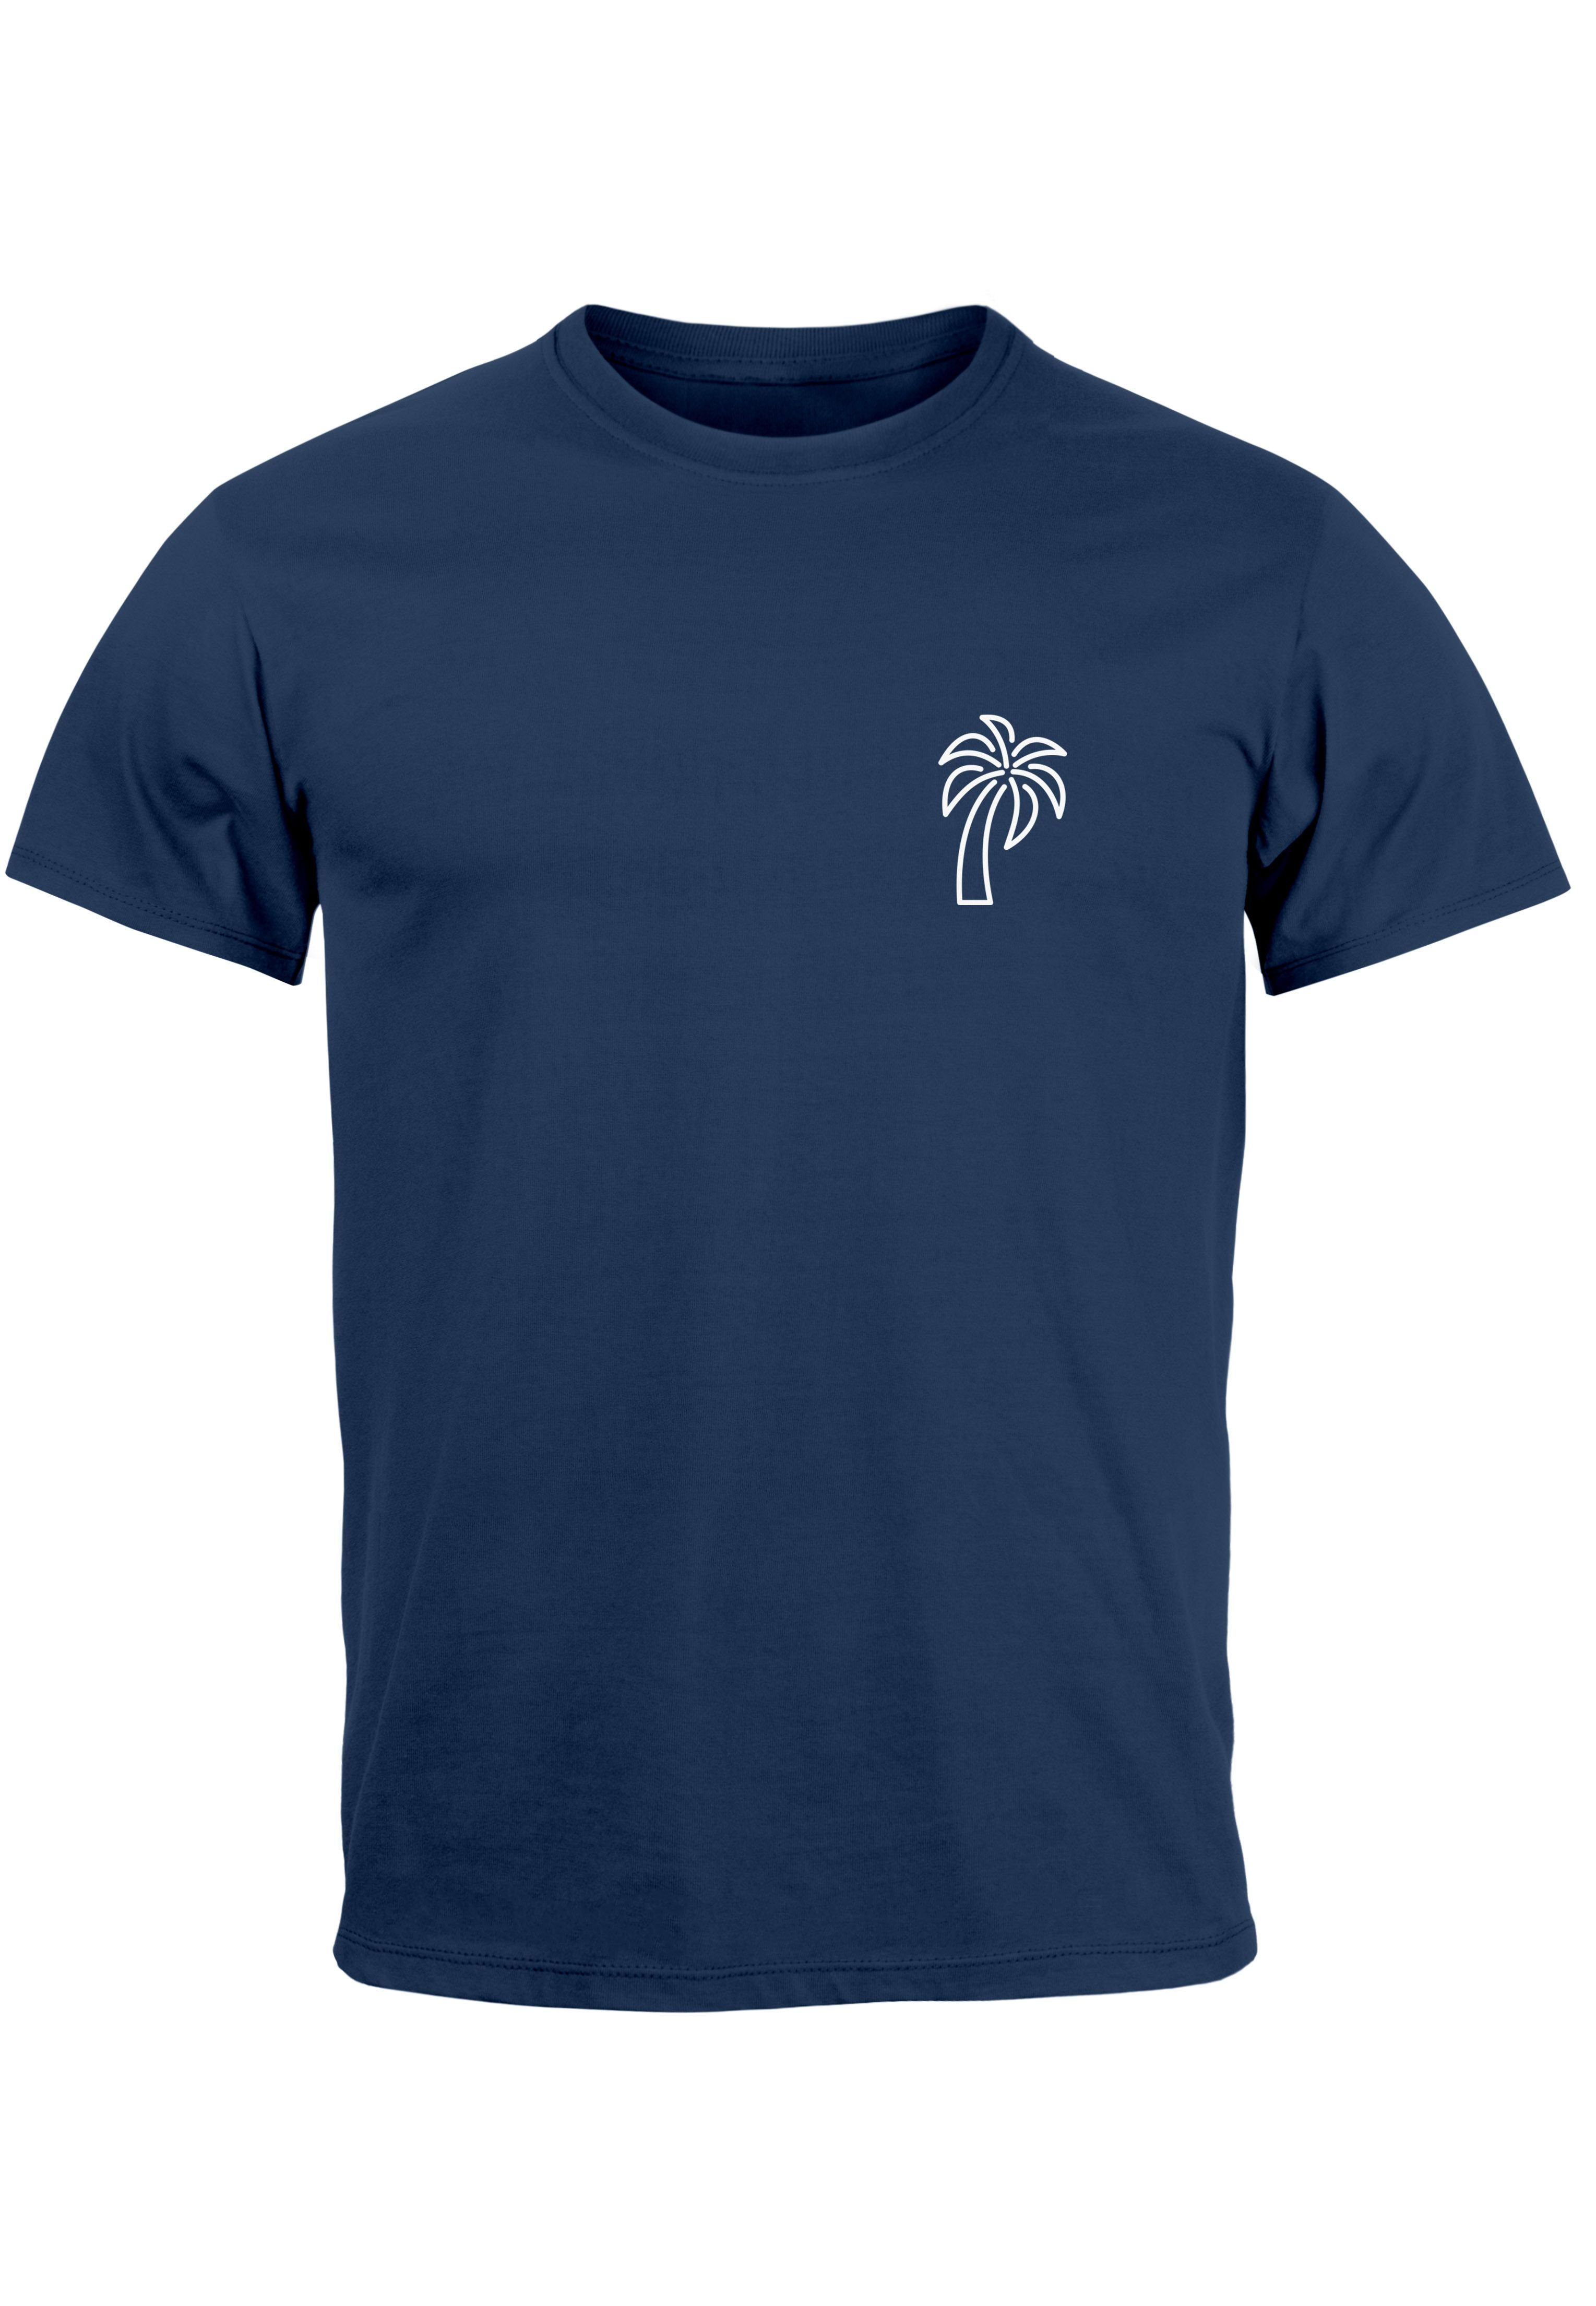 【Echt】 Neverless Print-Shirt Herren T-Shirt Palme Emblem Print Minimal Art Badge mit Logo navy weiß Print F Line Sommer